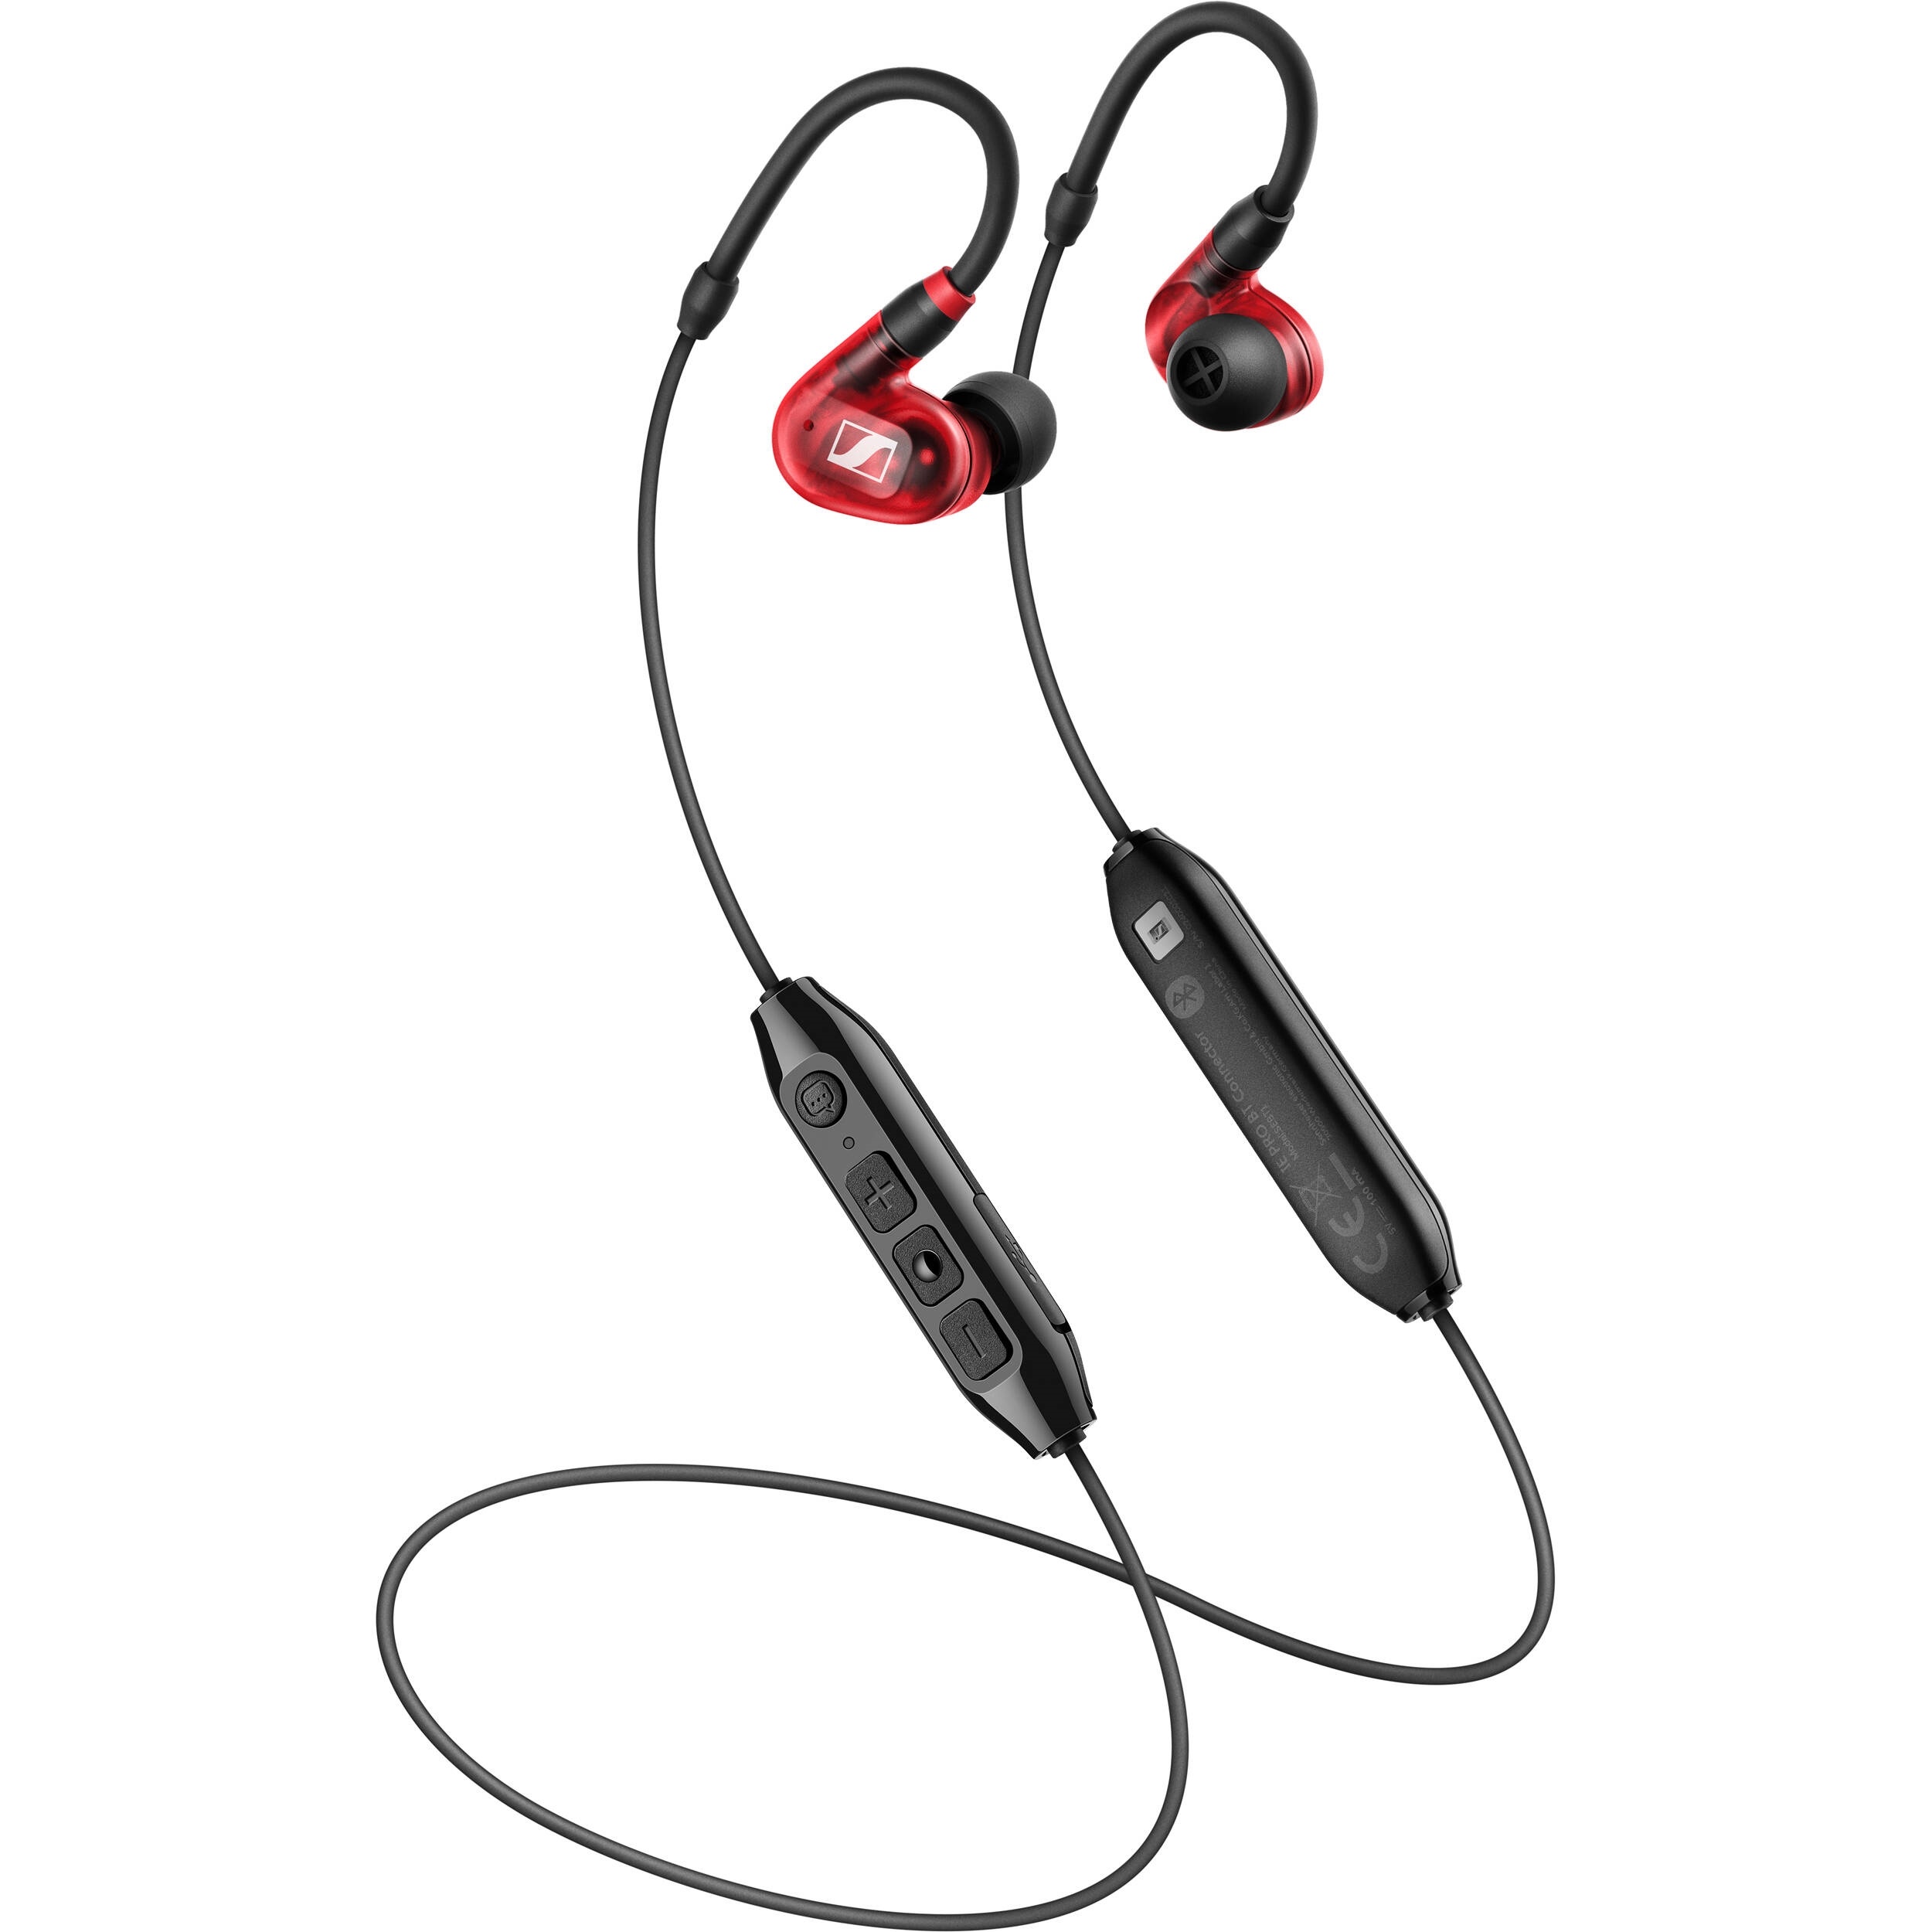 Sennheiser IE 100 PRO Wireless Professional In-Ear Monitoring Headphones (Red)